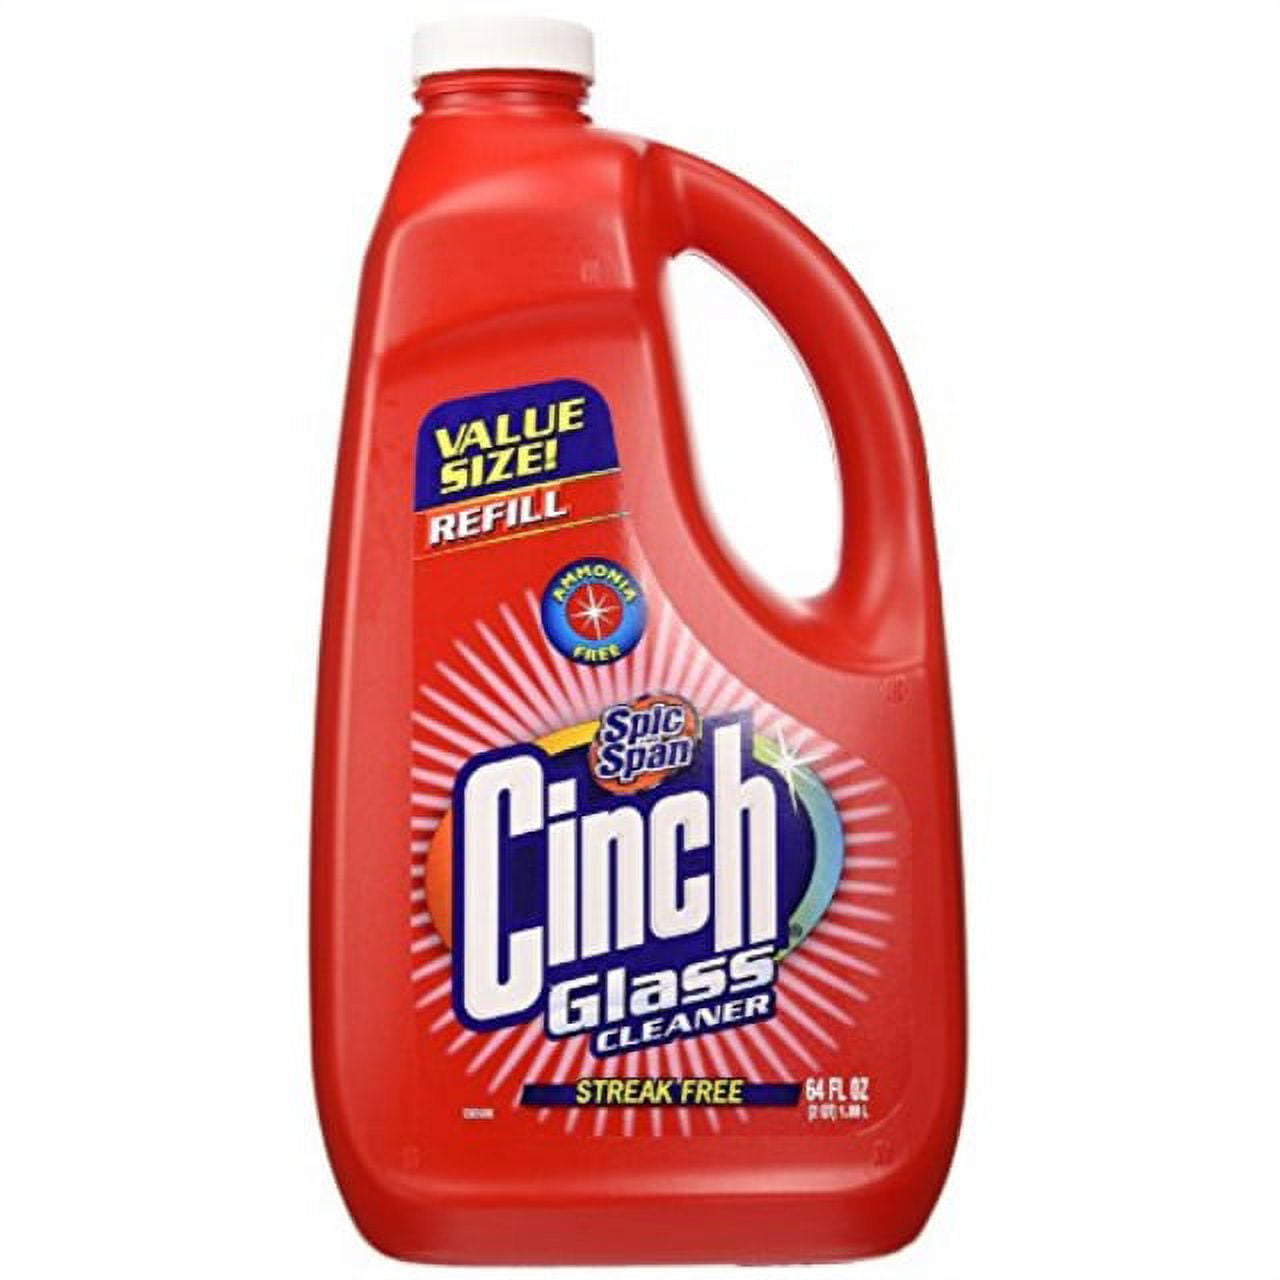 New Cinch Streak Free 2 in 1 Glass Window Cleaner Value Size Refill 64 oz